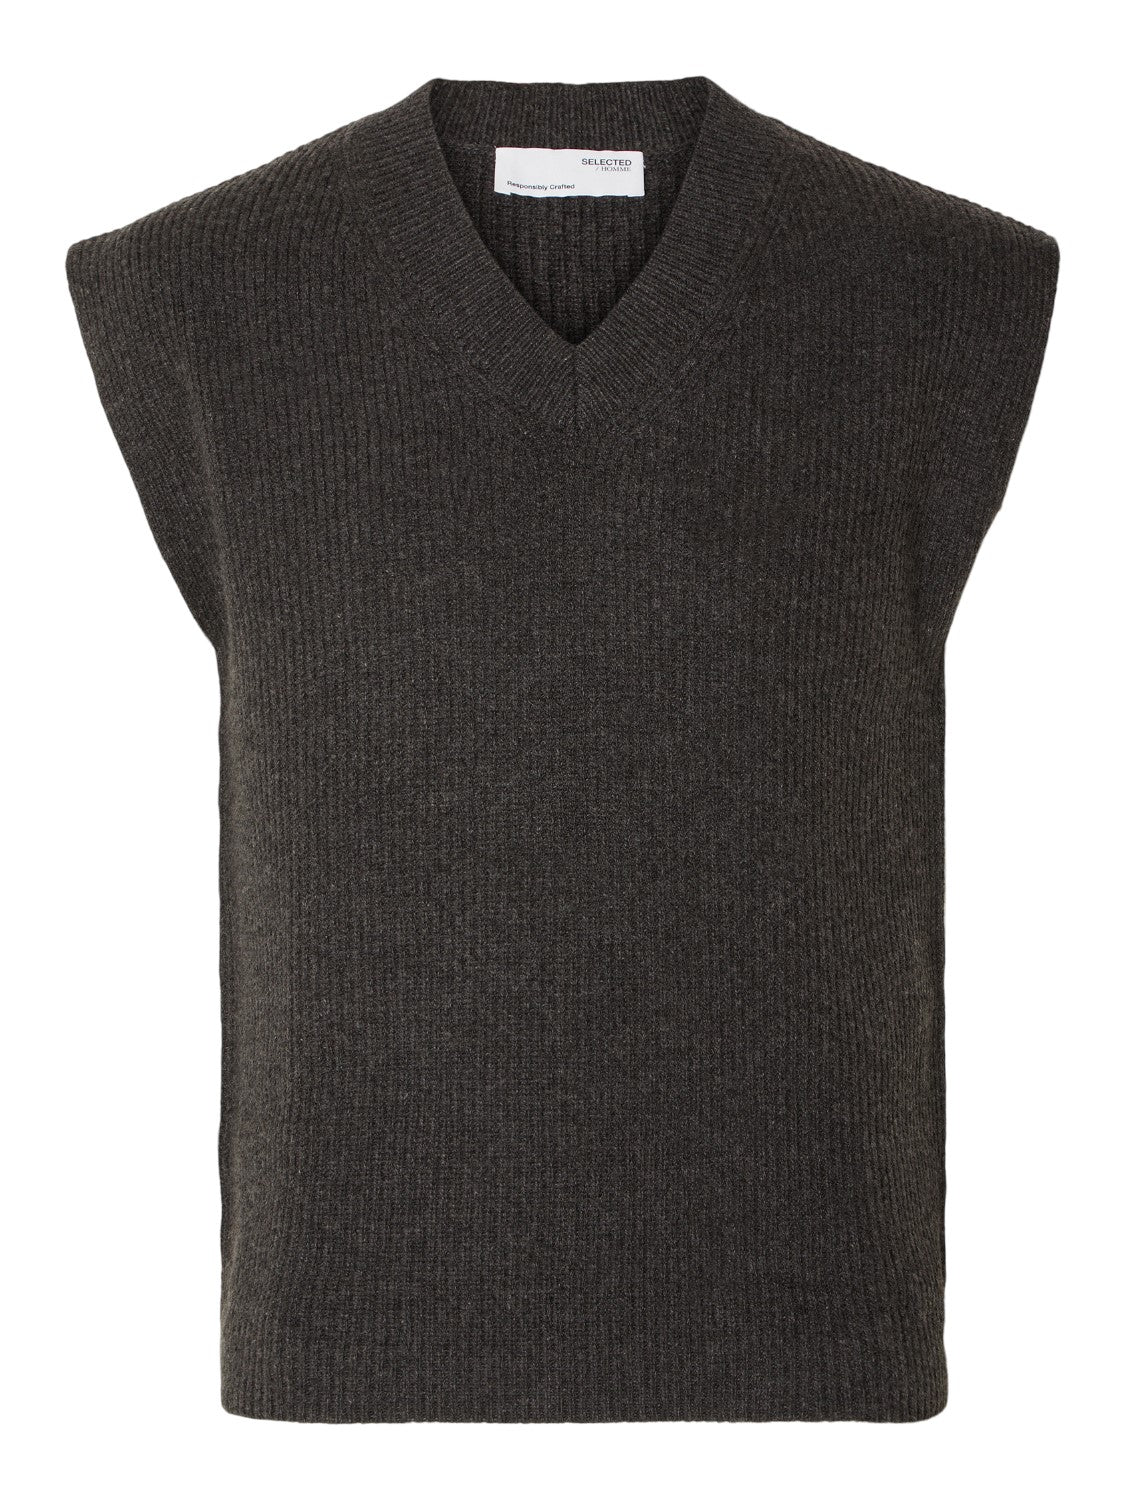 Ronn Relaxed Knit Vest - Charcoal Gray Melange